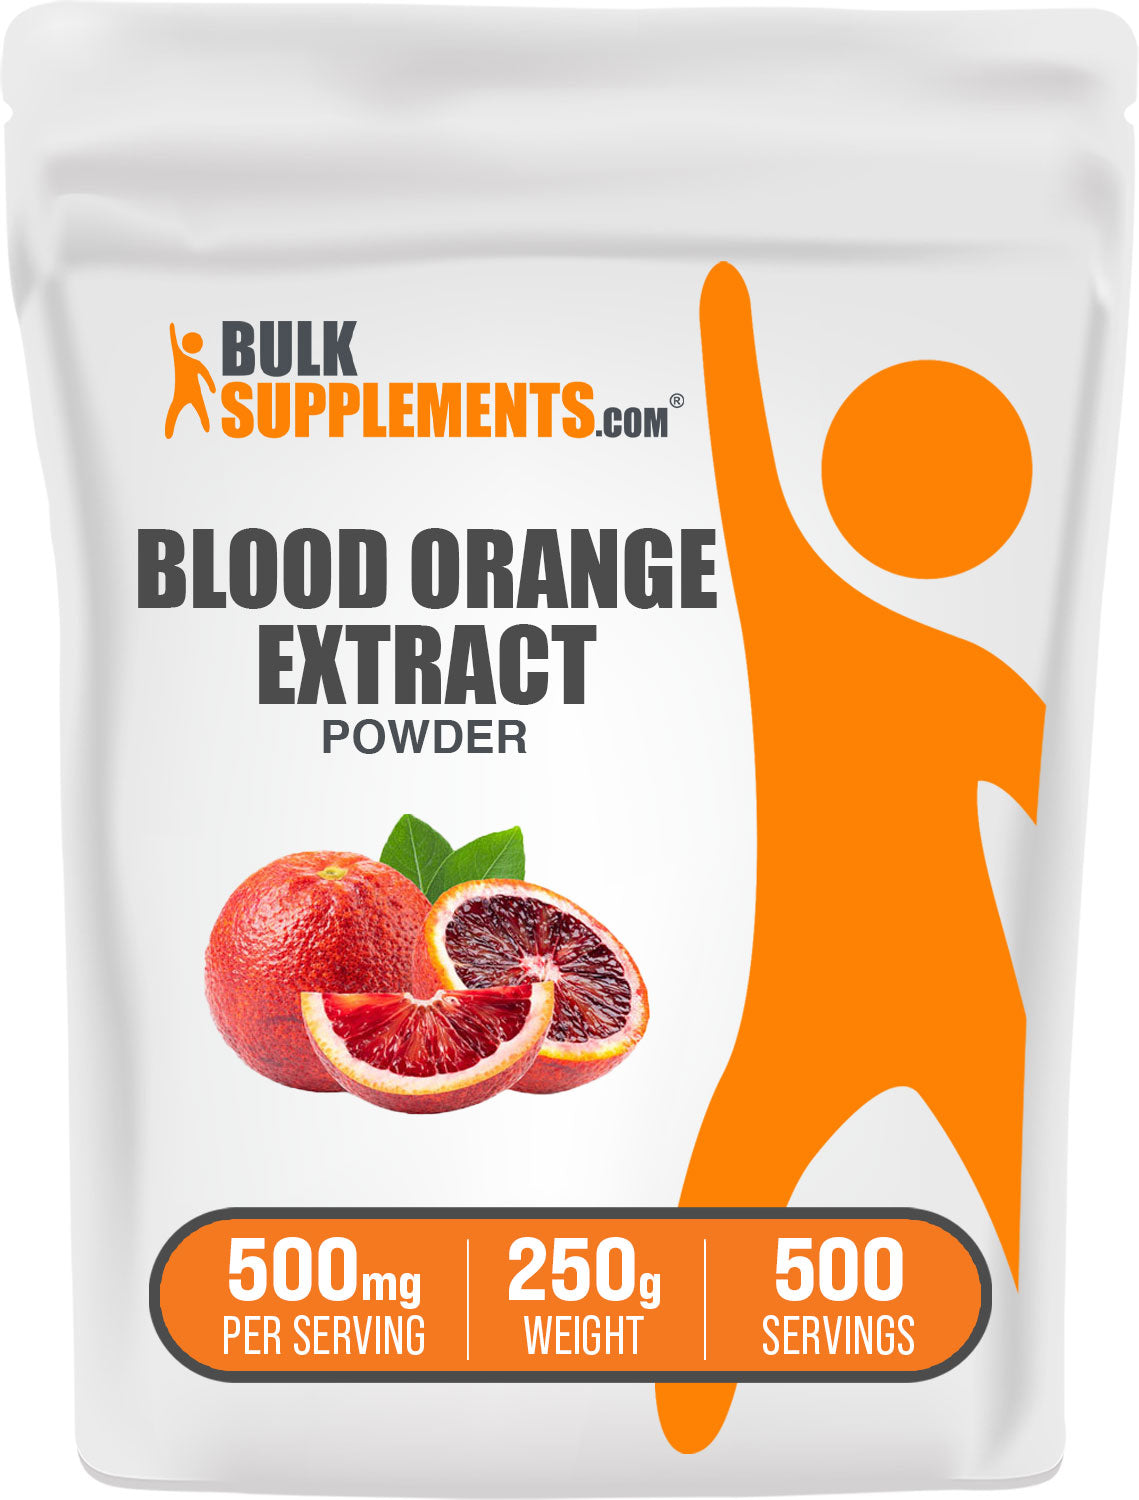 BulkSupplements.com Blood Orange Extract Powder 250g bag